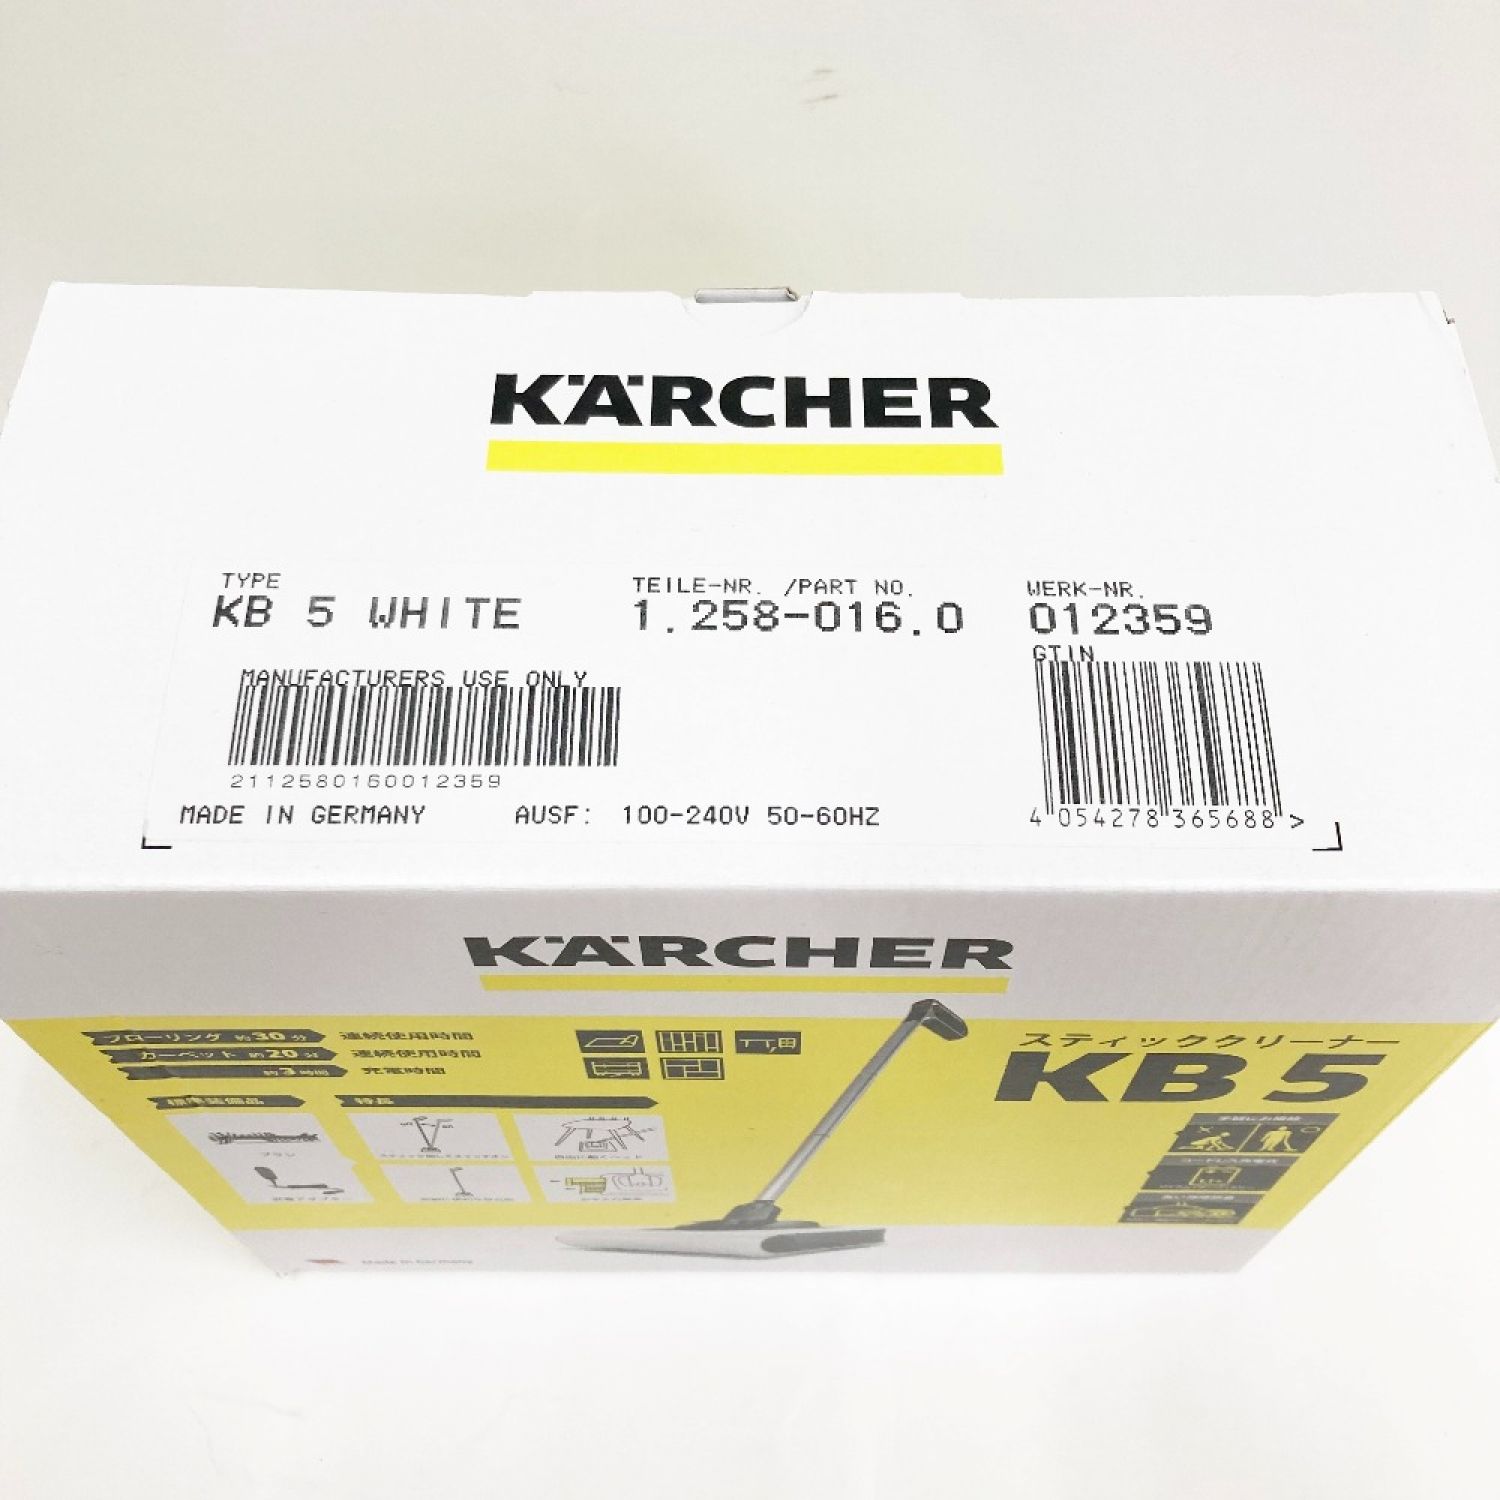 KARCHER ケルヒャー スティッククリーナー KB5 ホワイト 未使用品 Sランク